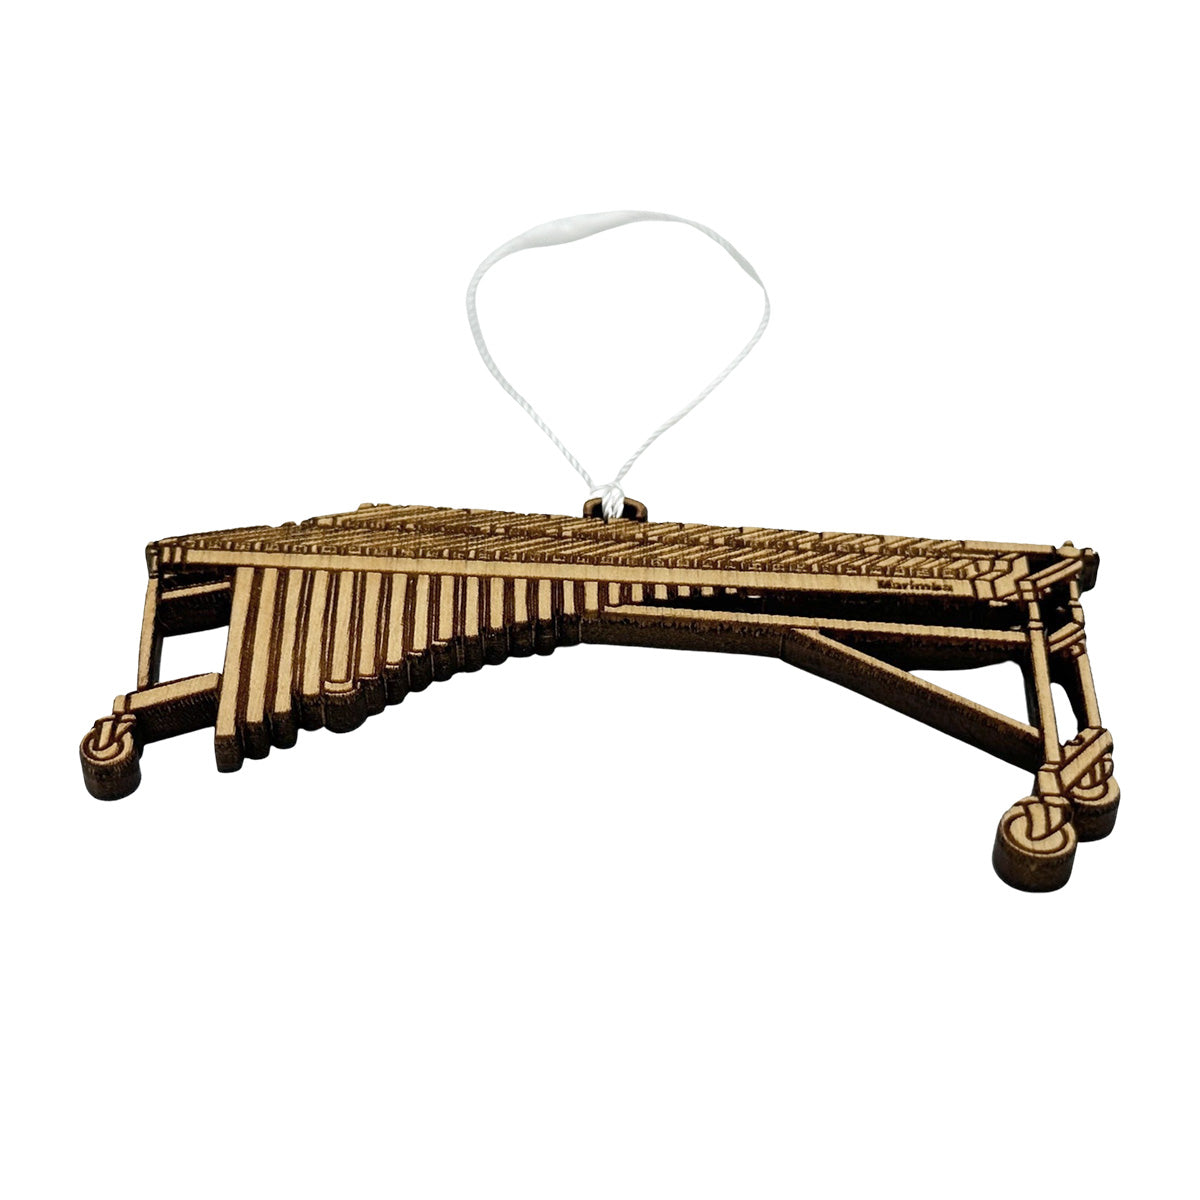 Marimba Engraved Wood Ornament